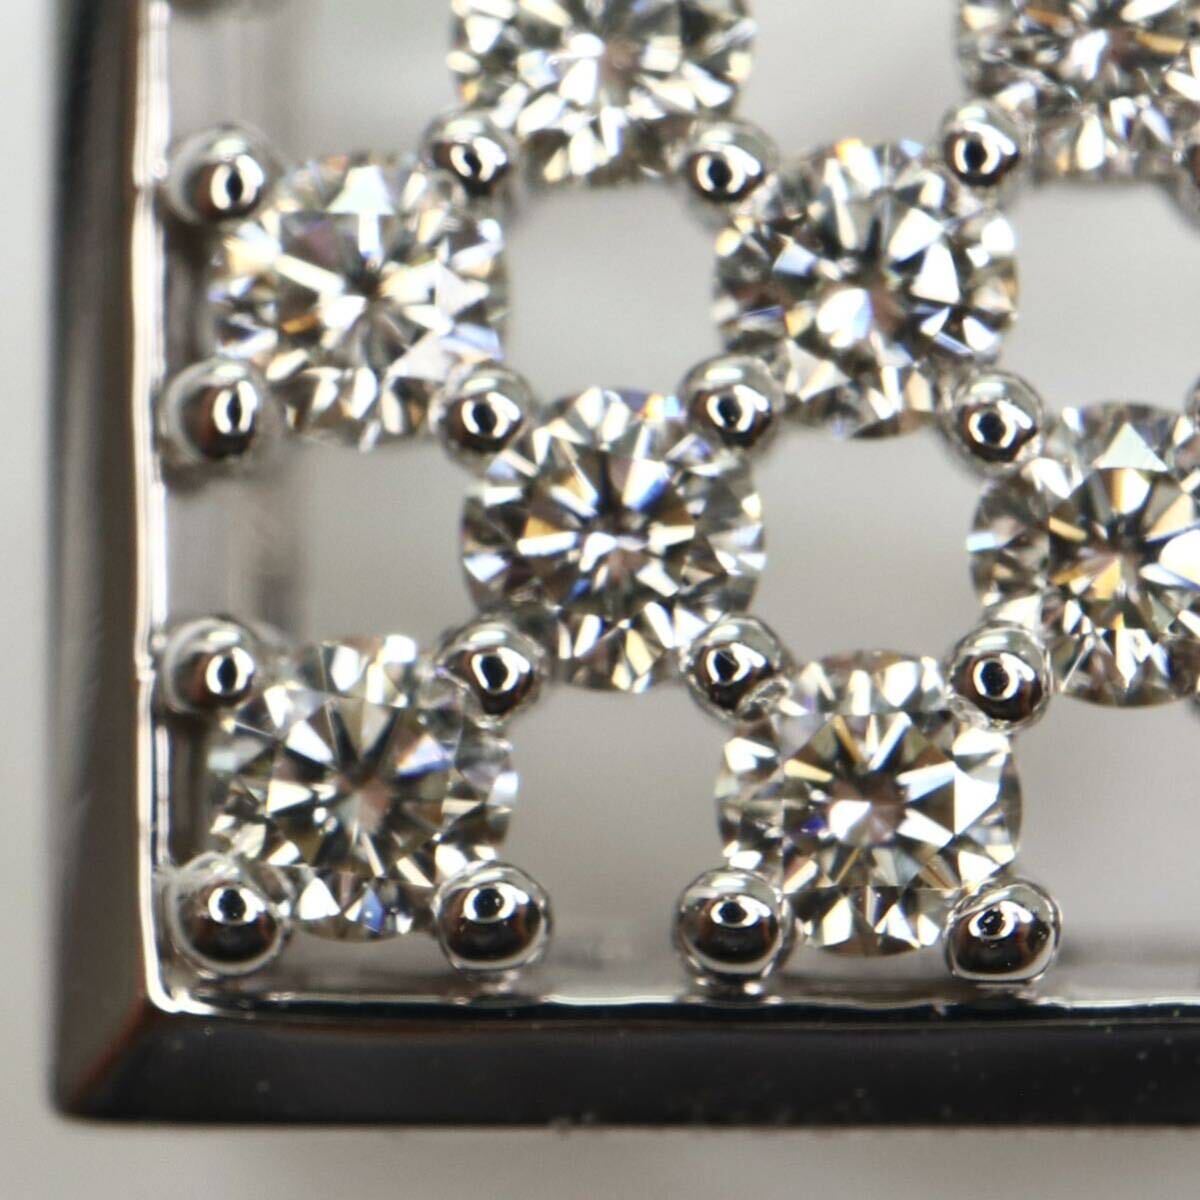 POLA Jewelry(ポーラジュエリー)《K18WG天然ダイヤモンドペンダントトップ》A 2.9g 0.42ct diamond pendant jewelry ジュエリー ED0/ED5の画像4